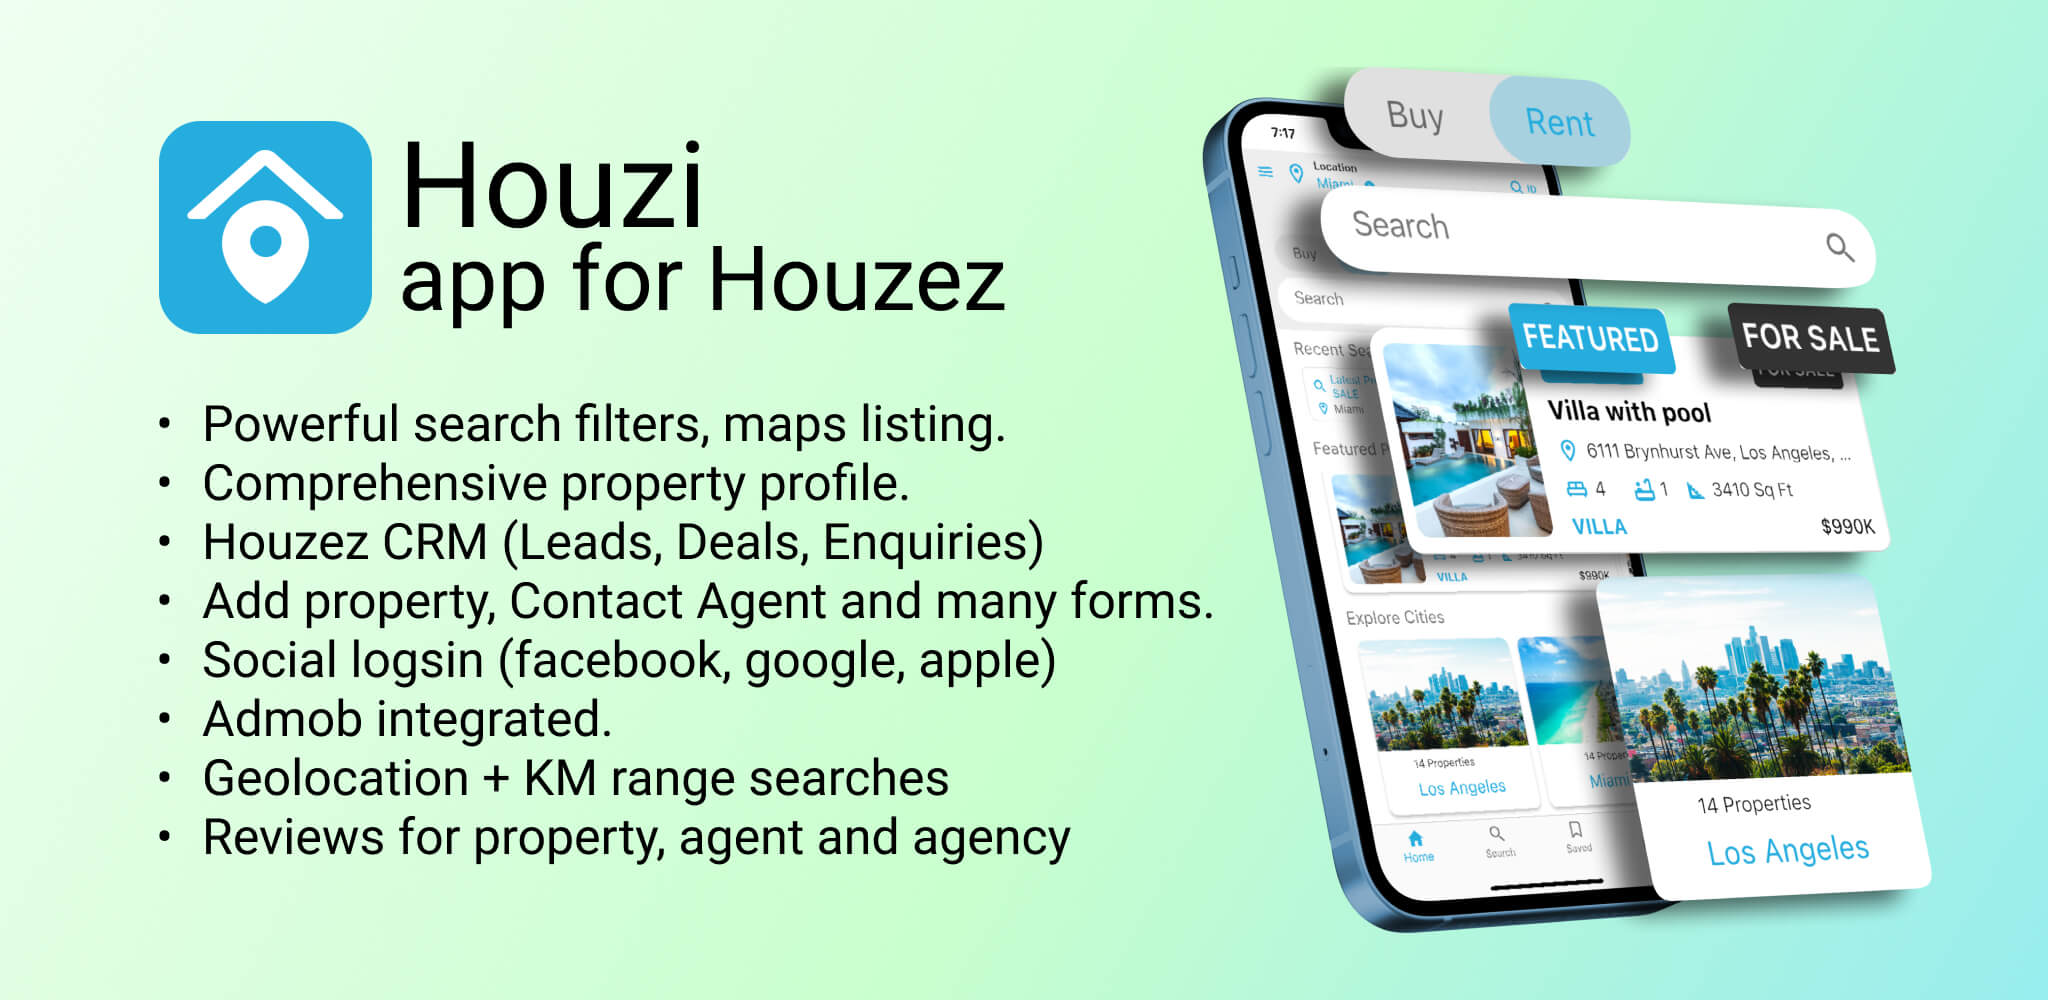 Houzi Real Estate App for Houzez